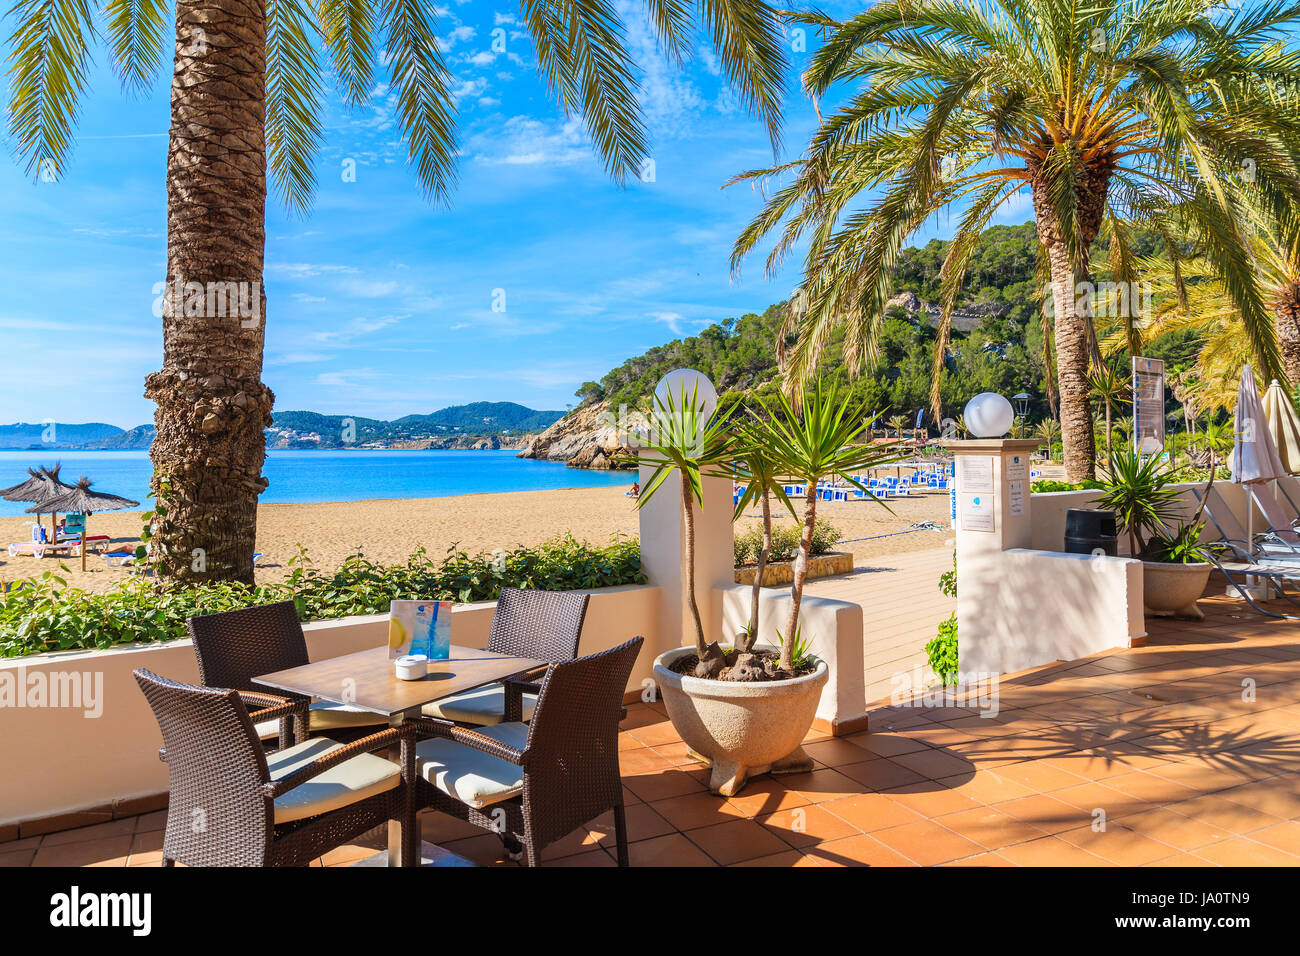 CALA SAN VICENTE BAY, IBIZA ISLAND - MAY 17, 2017: Hotel bar tables on beach with palm trees in Cala San Vicente bay, Ibiza island, Spain. Stock Photo